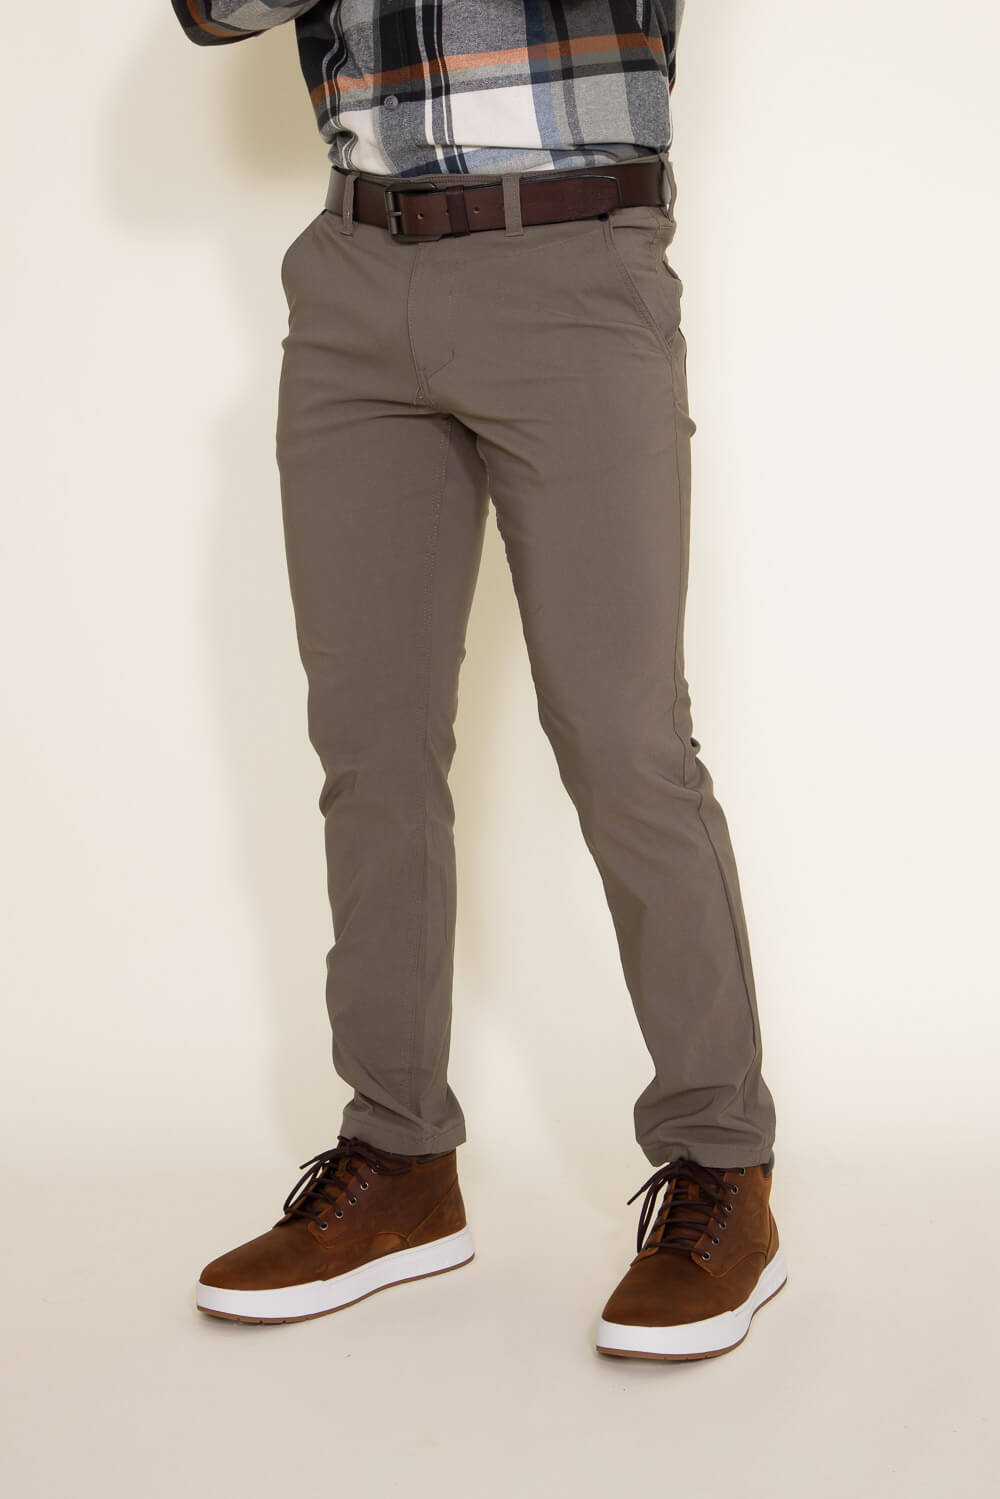 Weatherproof Vintage Faille Trouser Pants for Men in Brown/Green